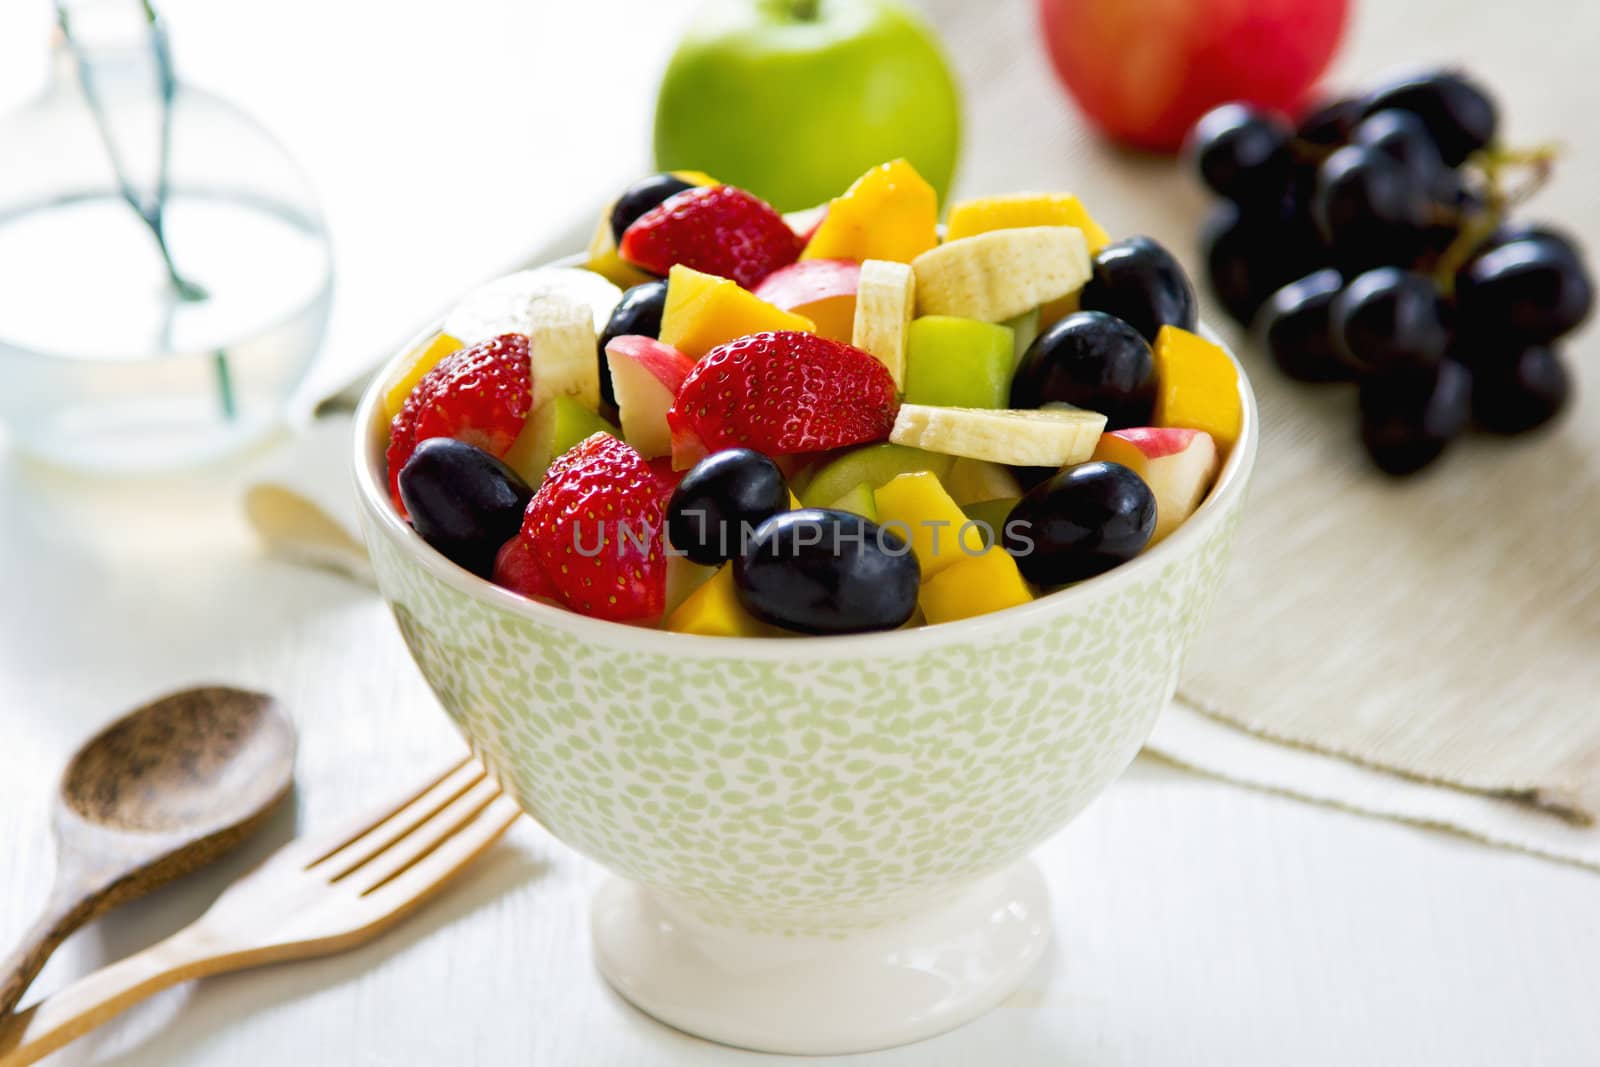 Varieties of fruits salad in a bowl